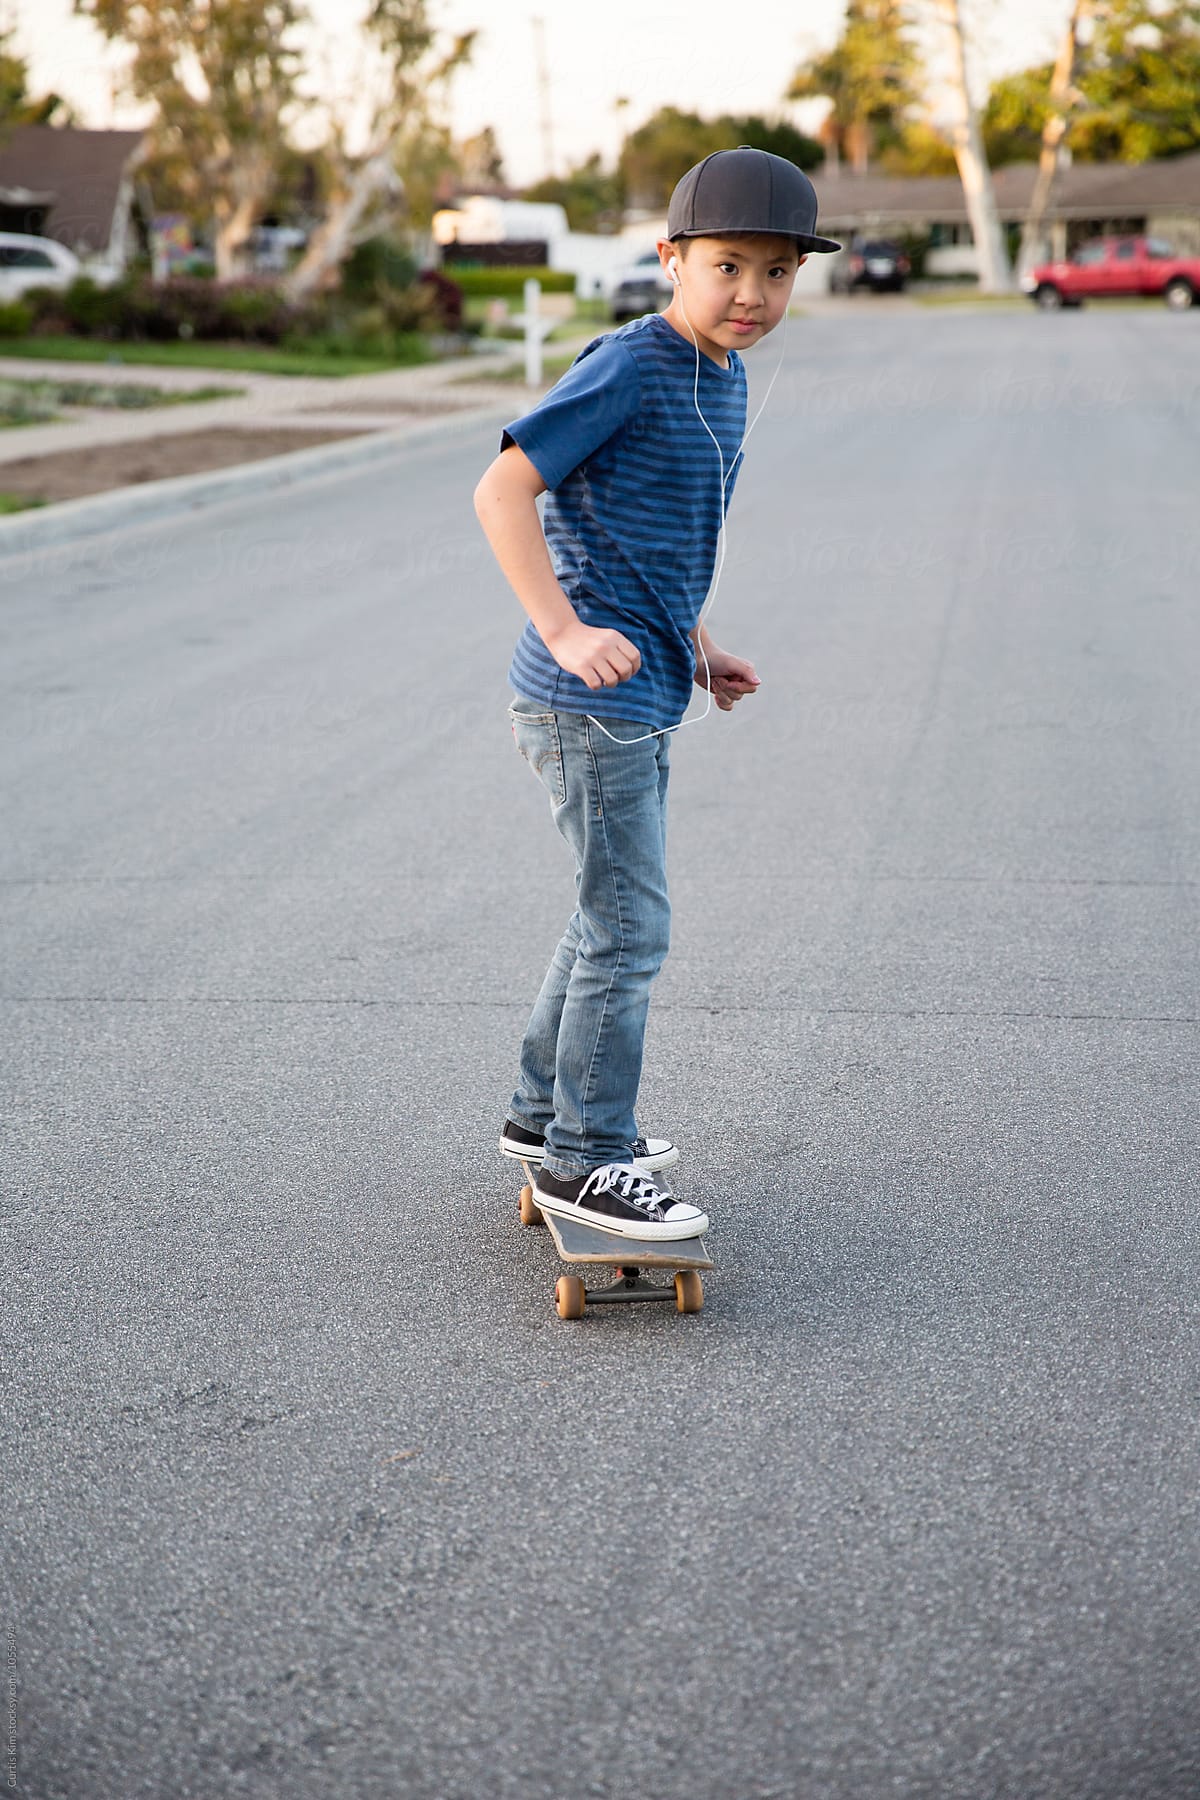 Cruising on his skateboard